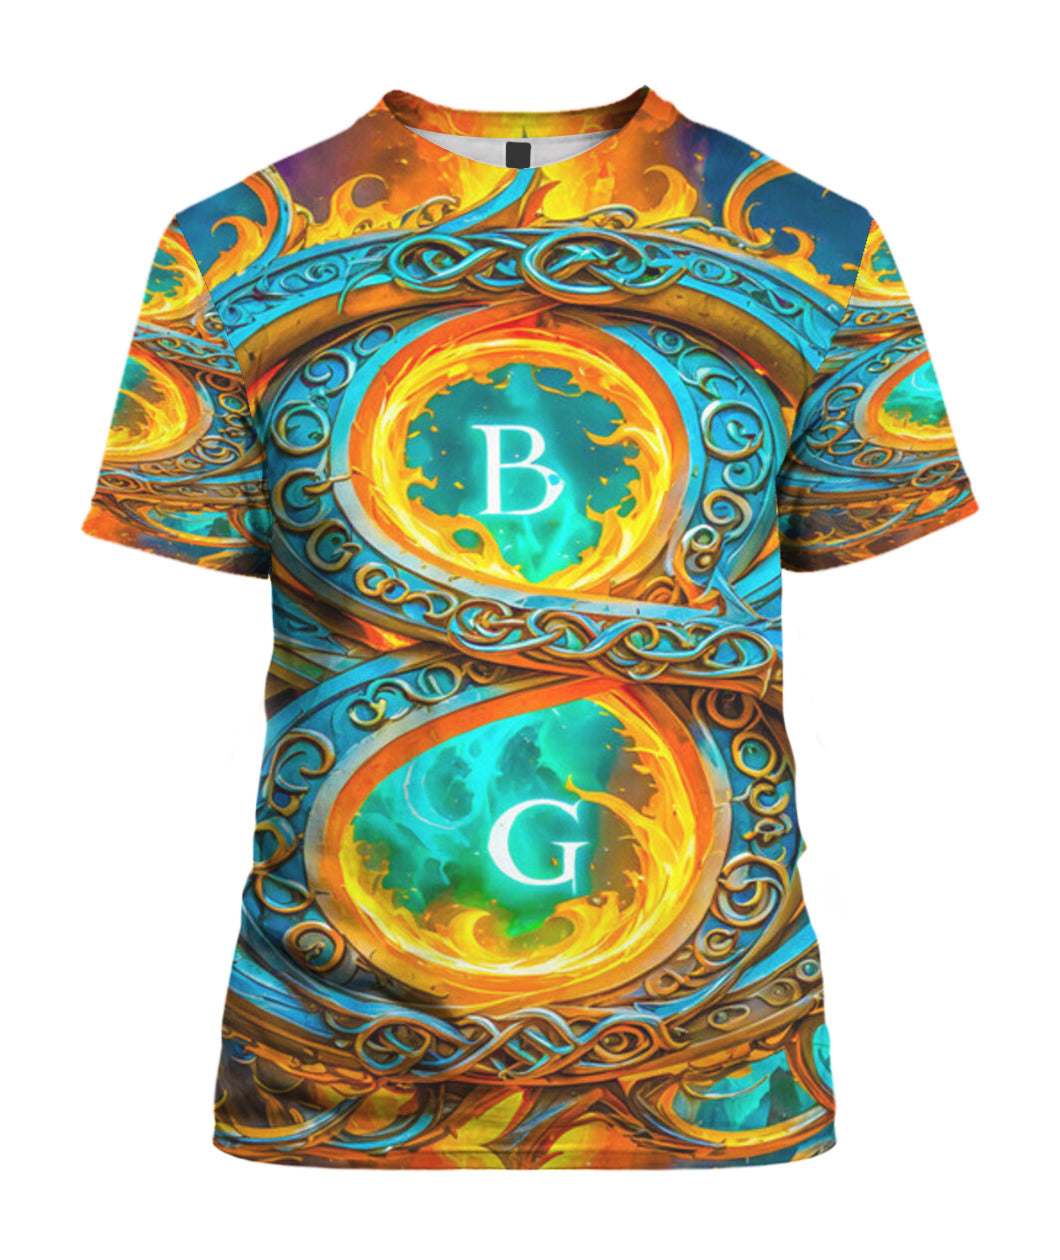 BG Number 8 Unisex T-Shirt by Burning Guitars